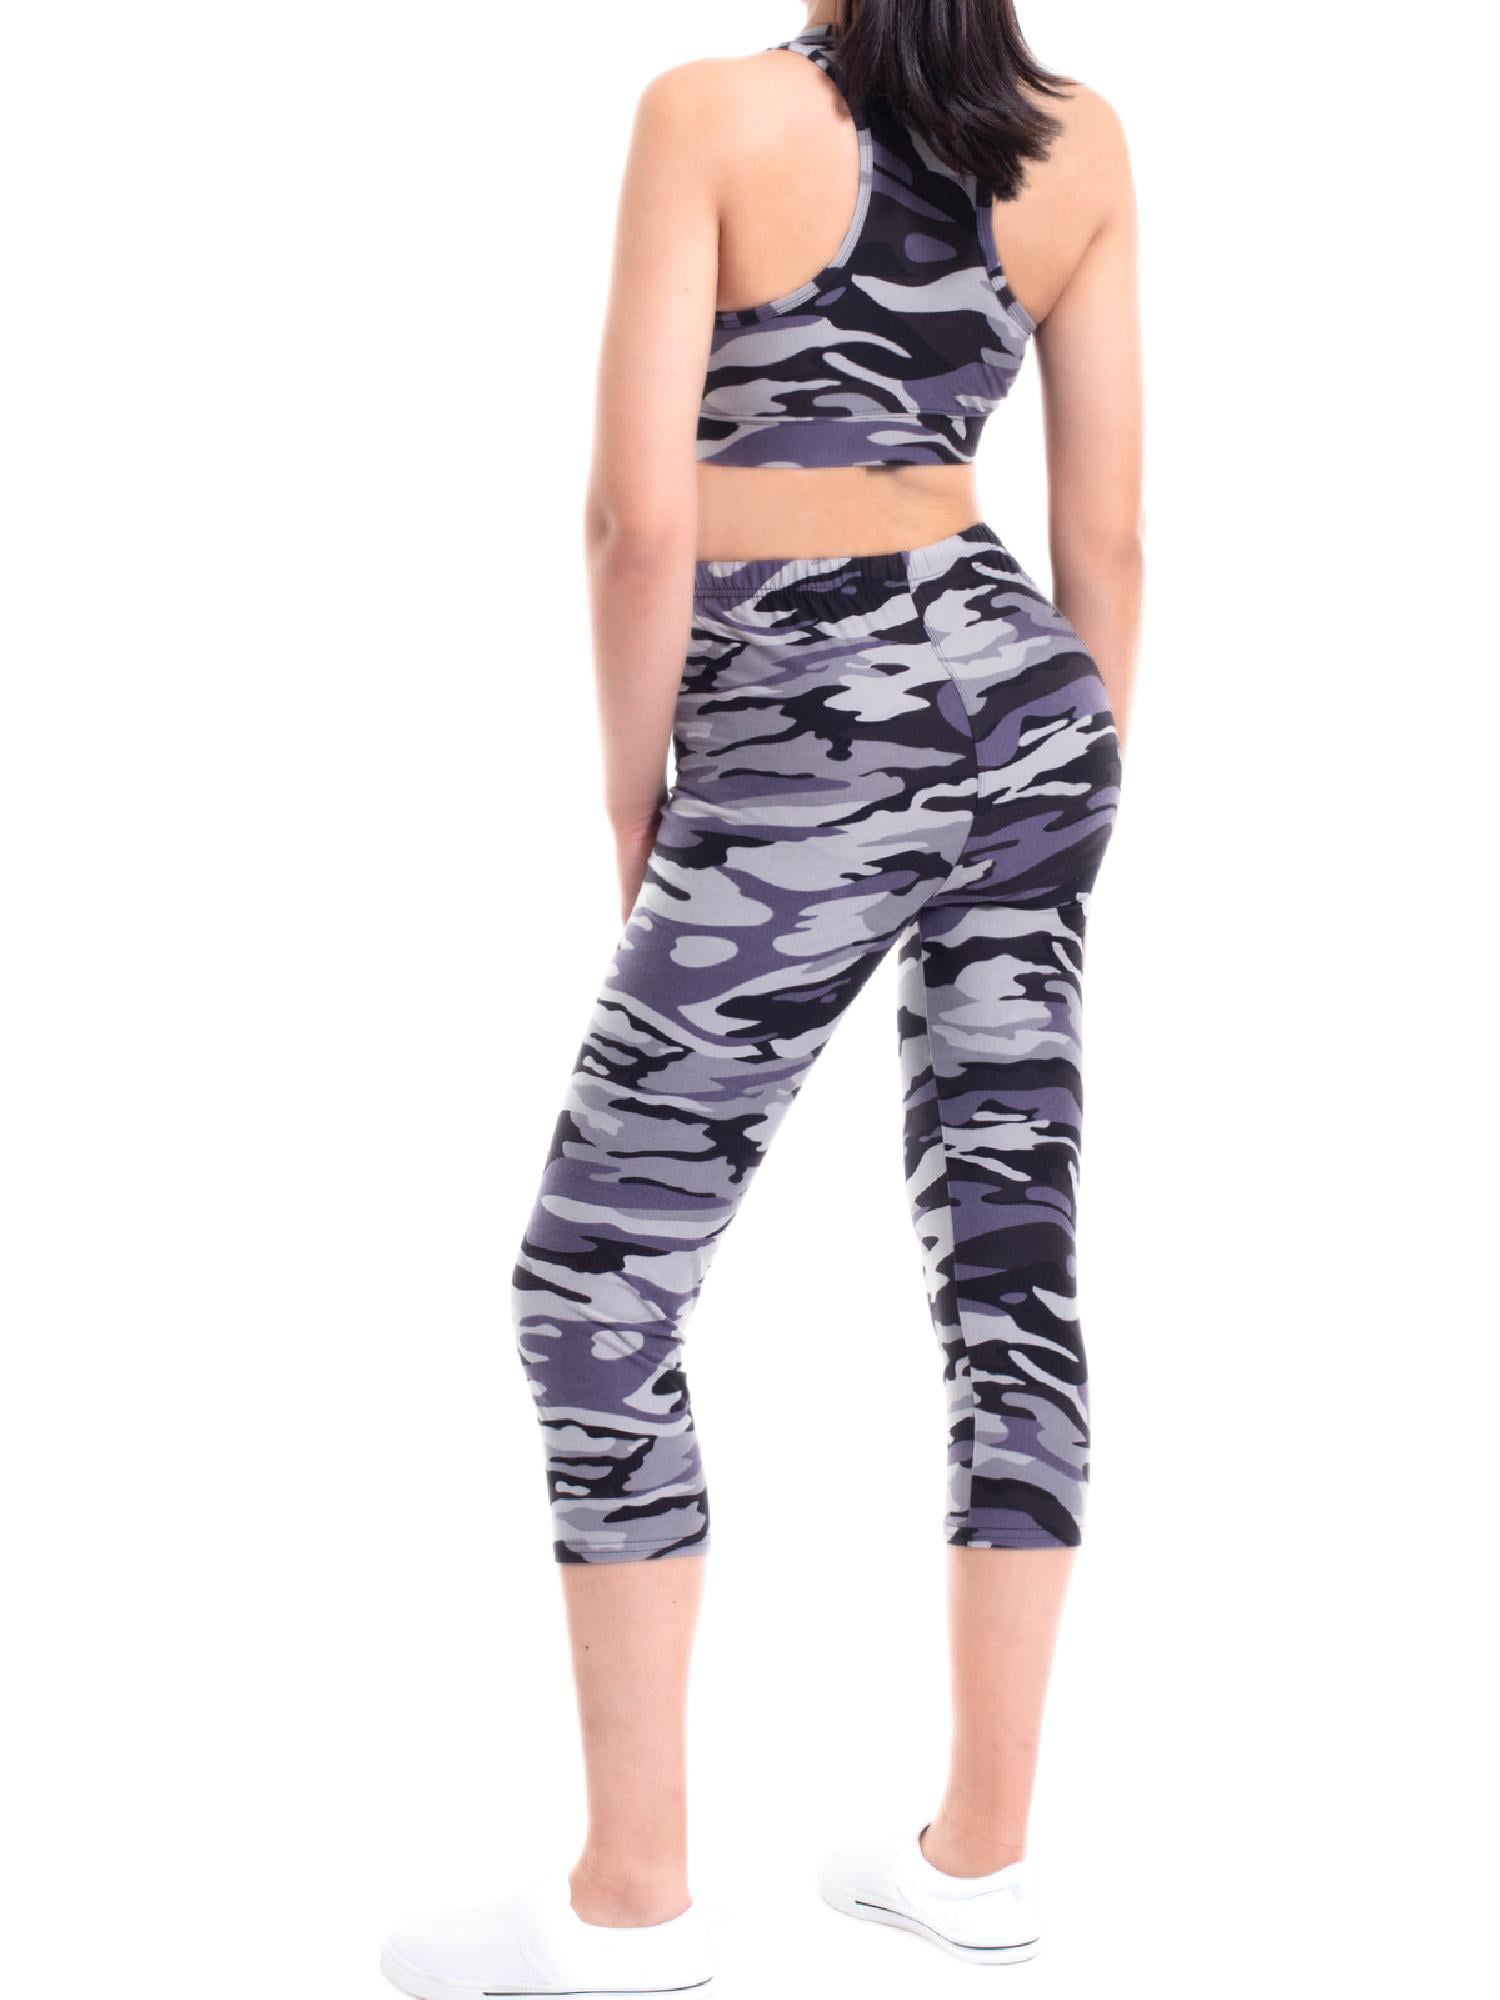 MixMatchy Womens Sports Gym Yoga Workout Activewear Sets Top /& Leggings Set